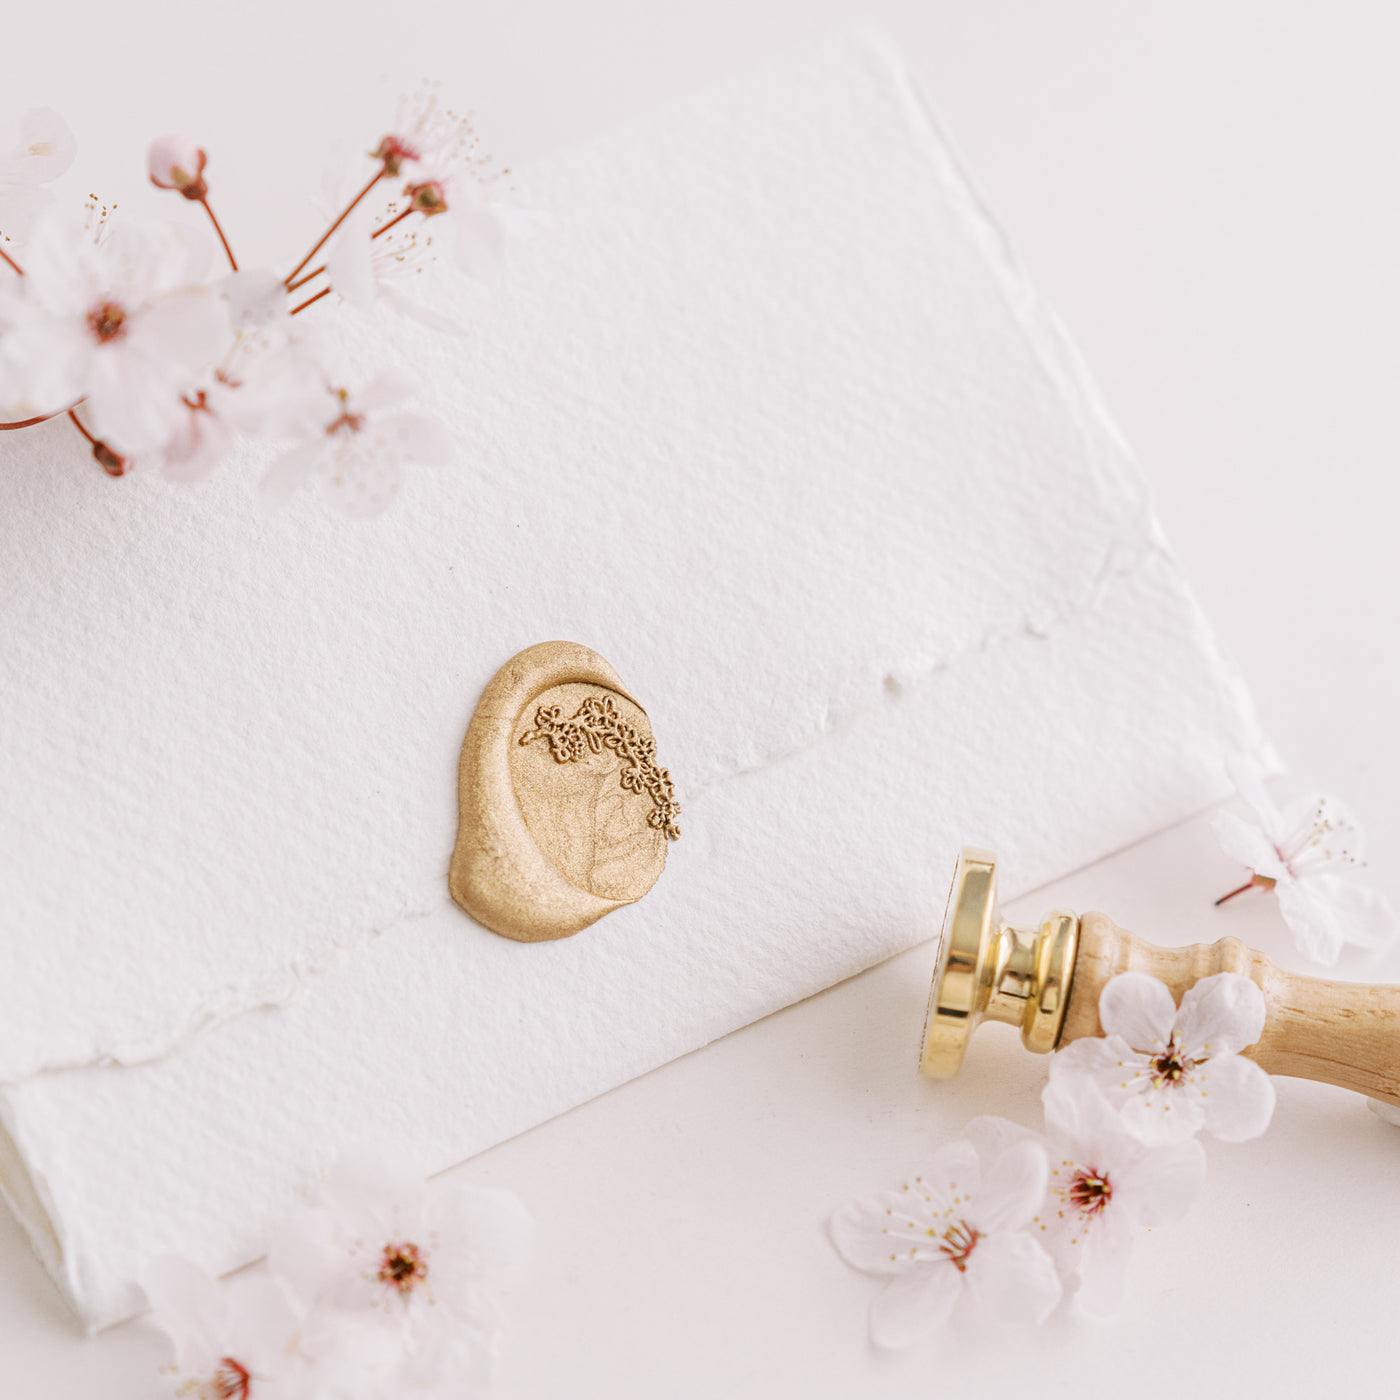 Pink Pearl Cherry Blossom Botanical Design | Oval Self-Adhesive Wax Seals Embosser & Rubber Stamp | 'Sakura' Cherry Blossom Embellishments for Blush Pink Spring Wedding | Heirloom Seals